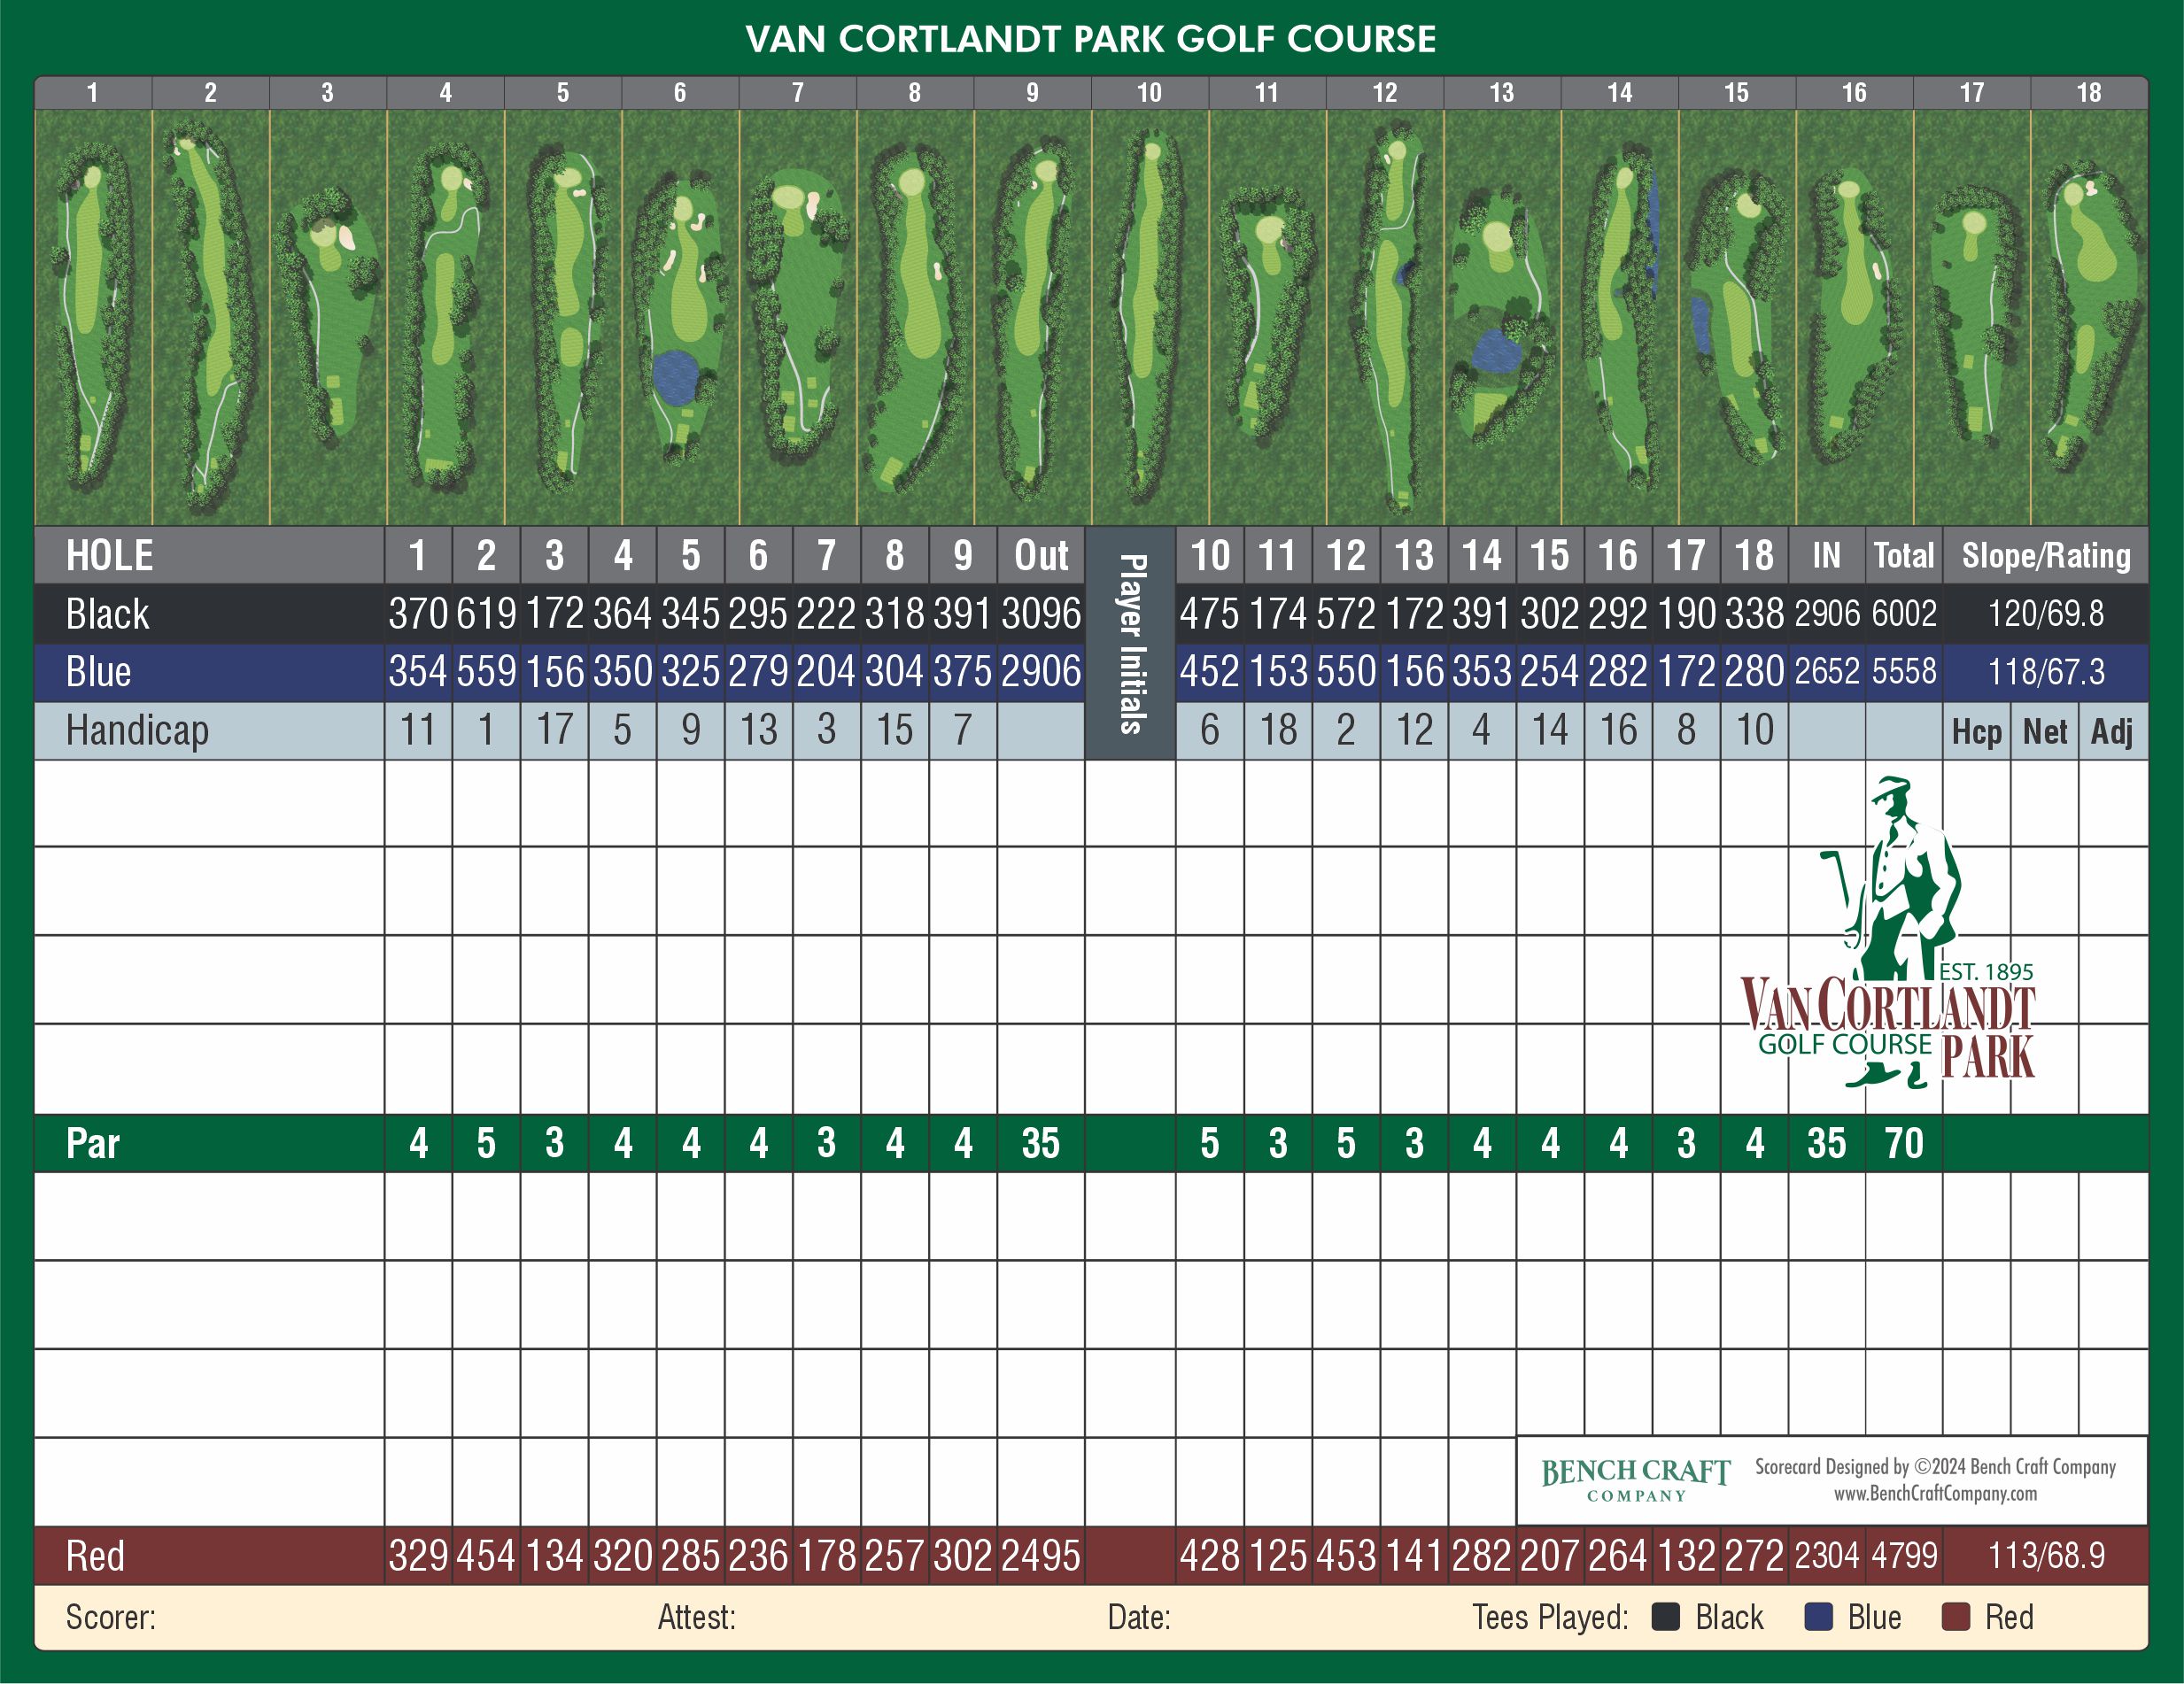 Van Cortlandt Golf Course - Reviews & Course Info